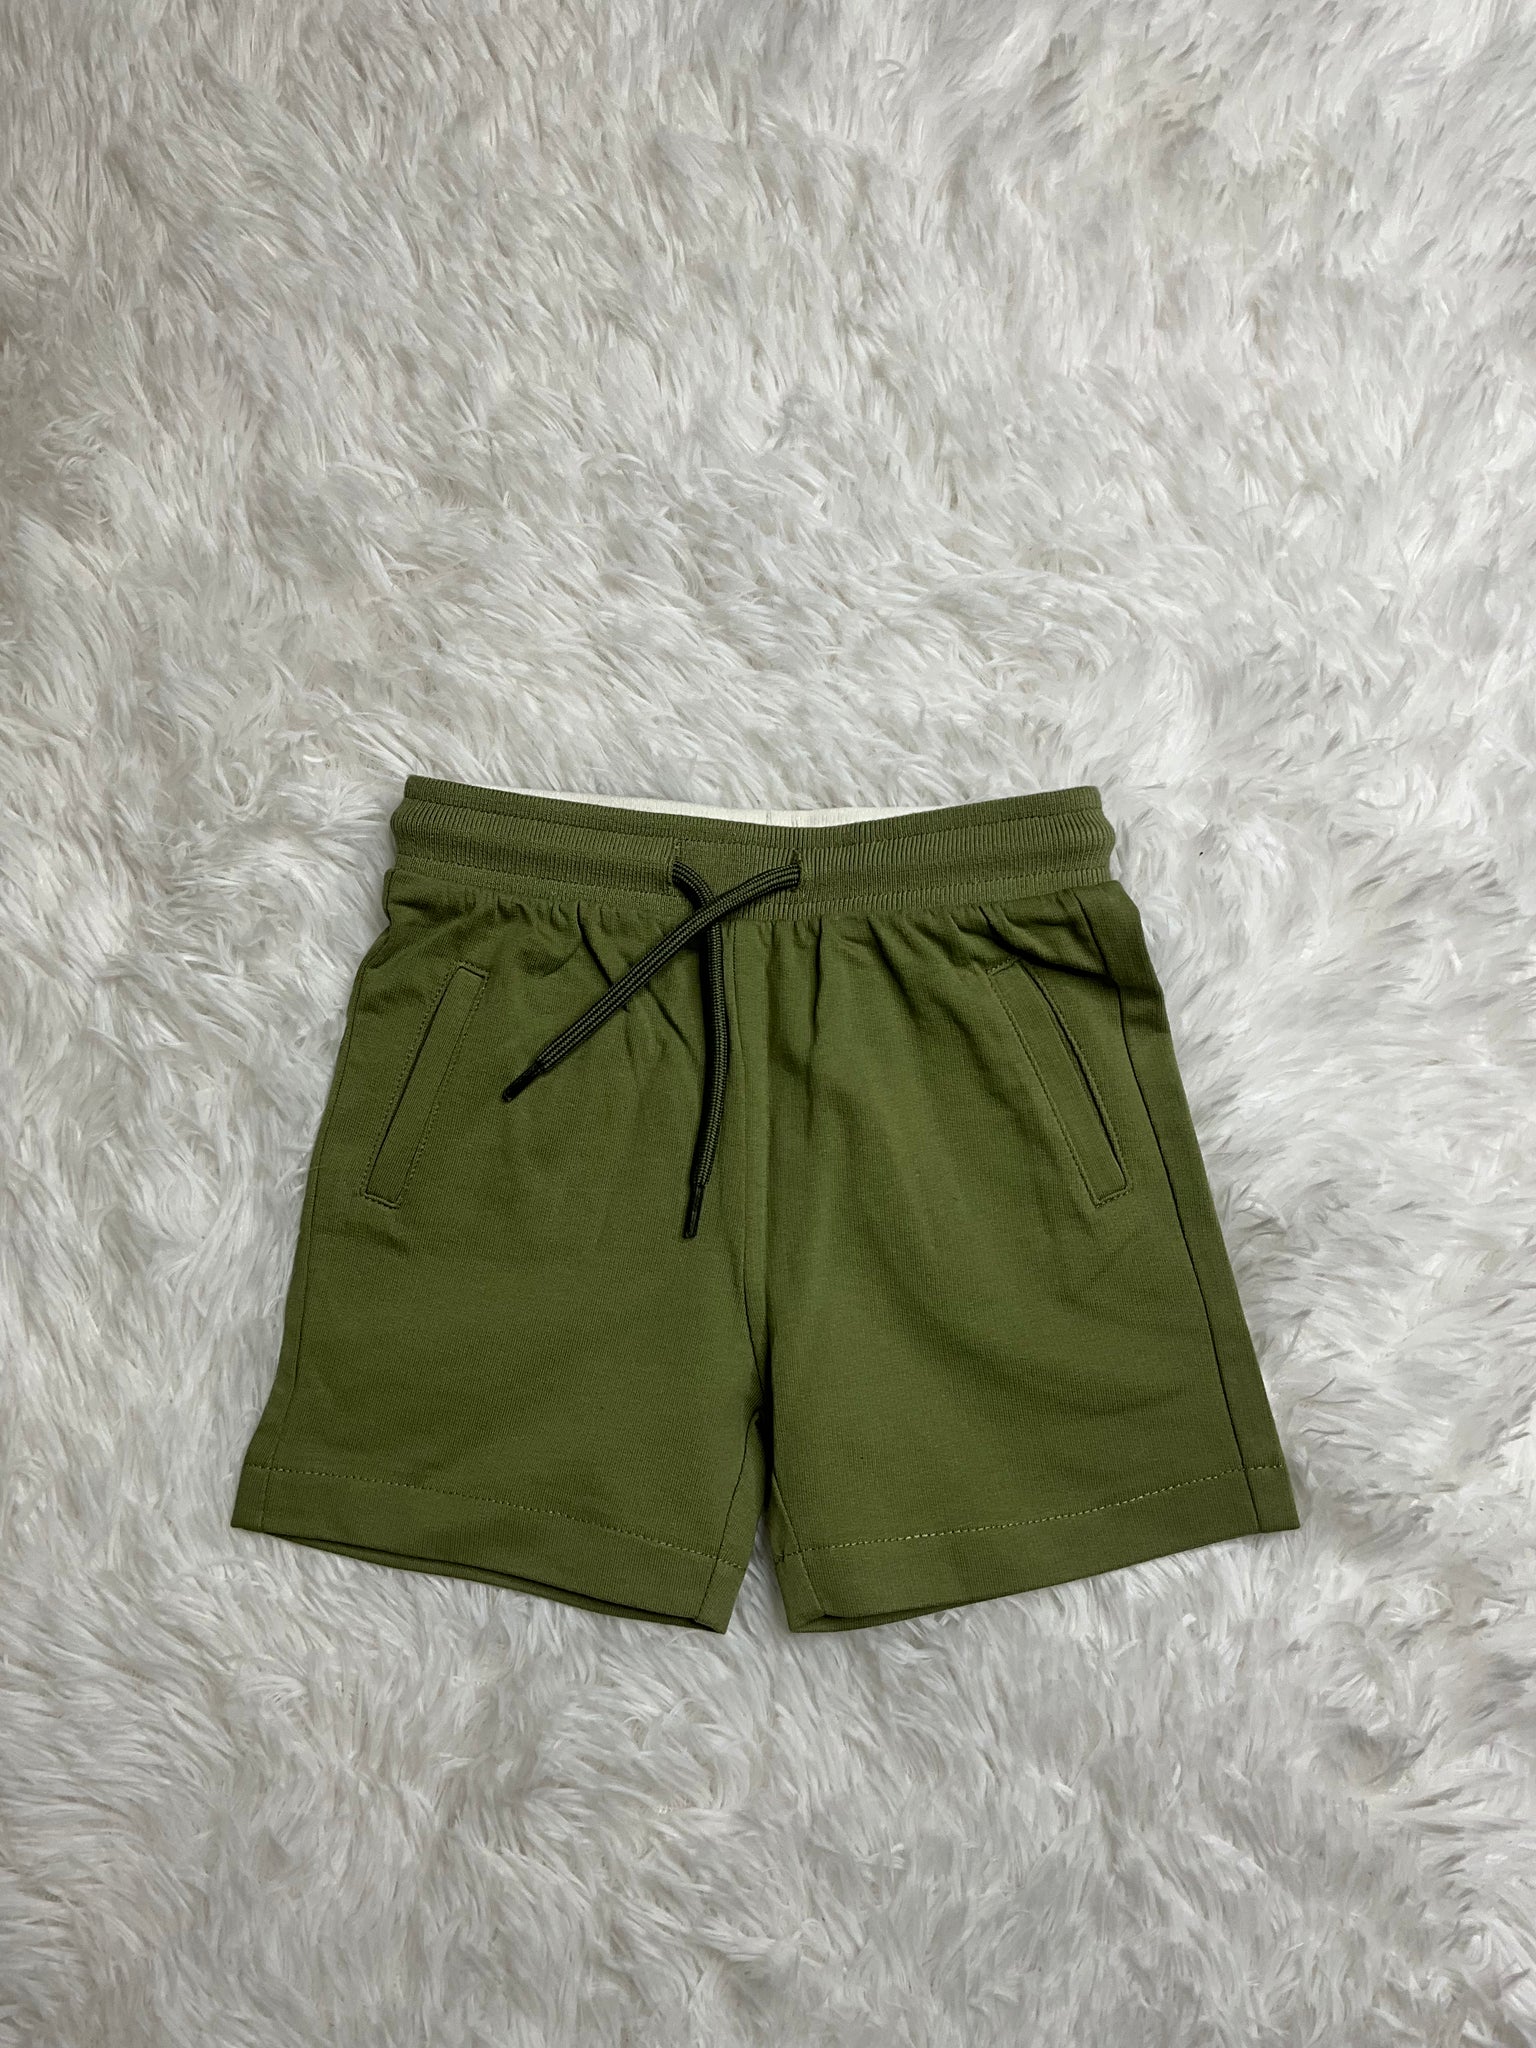 Olive Fleece Shorts